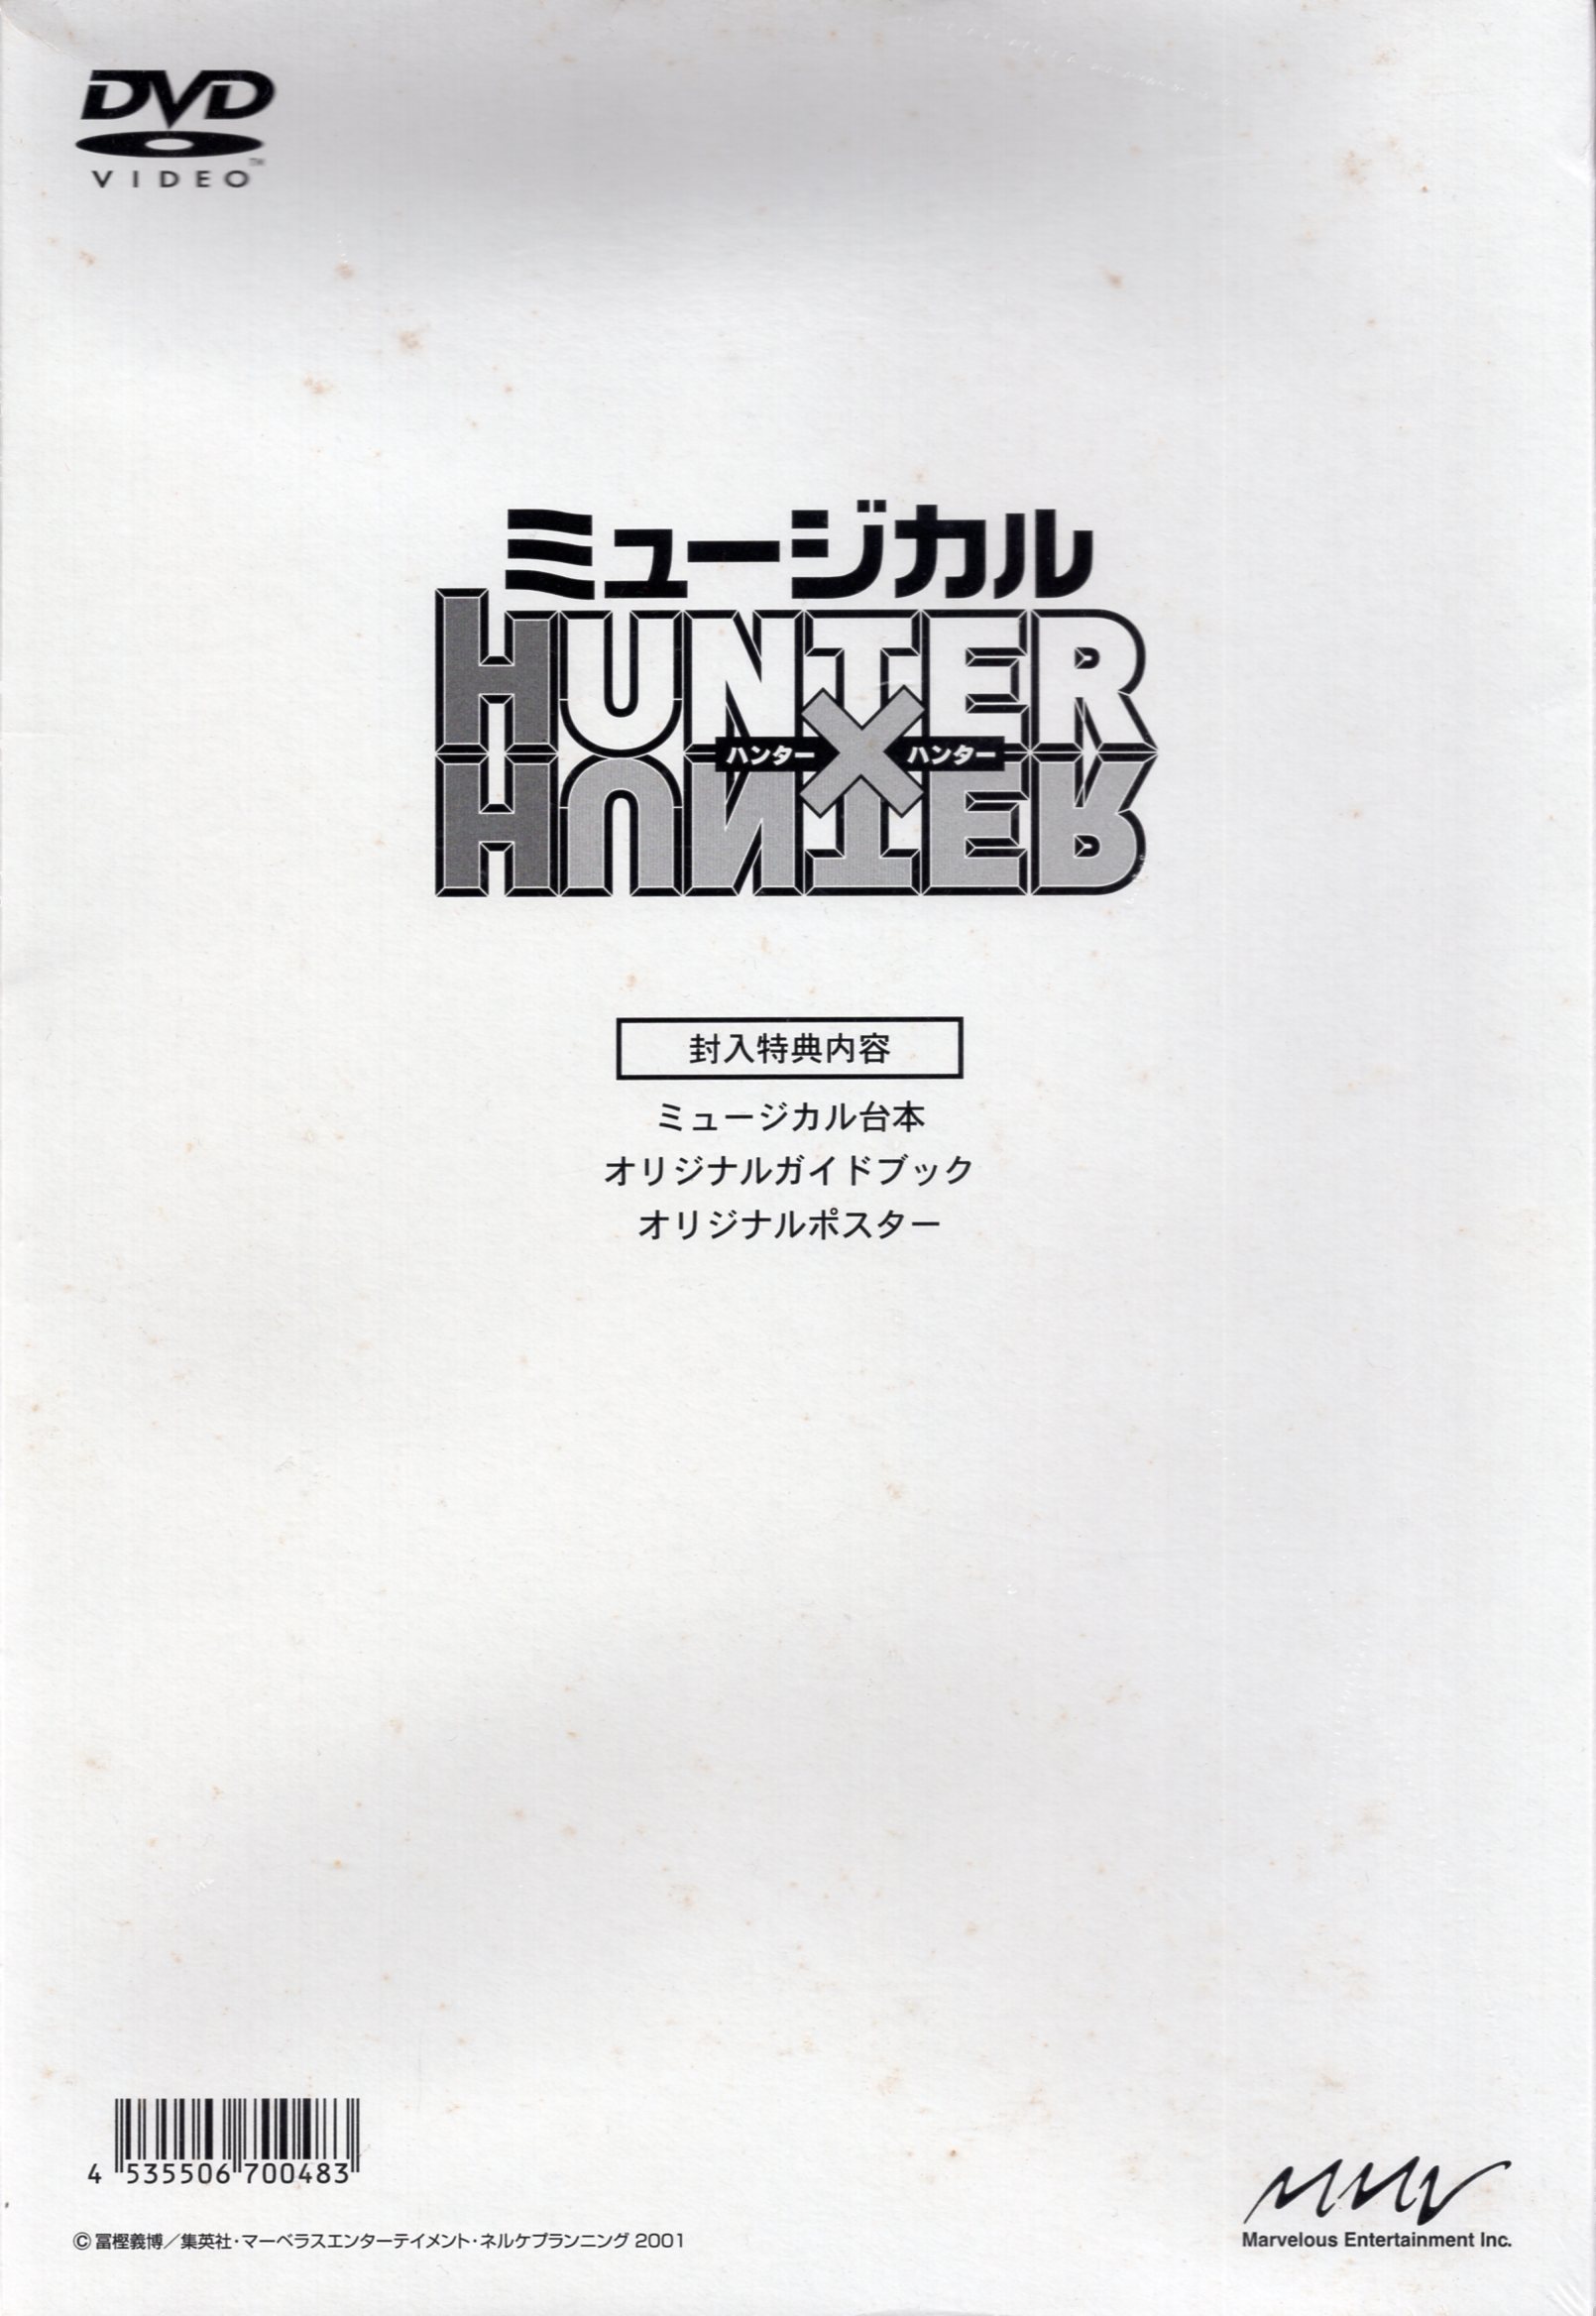 HUNTER×HUNTER ミュージカル DVD - お笑い・バラエティ